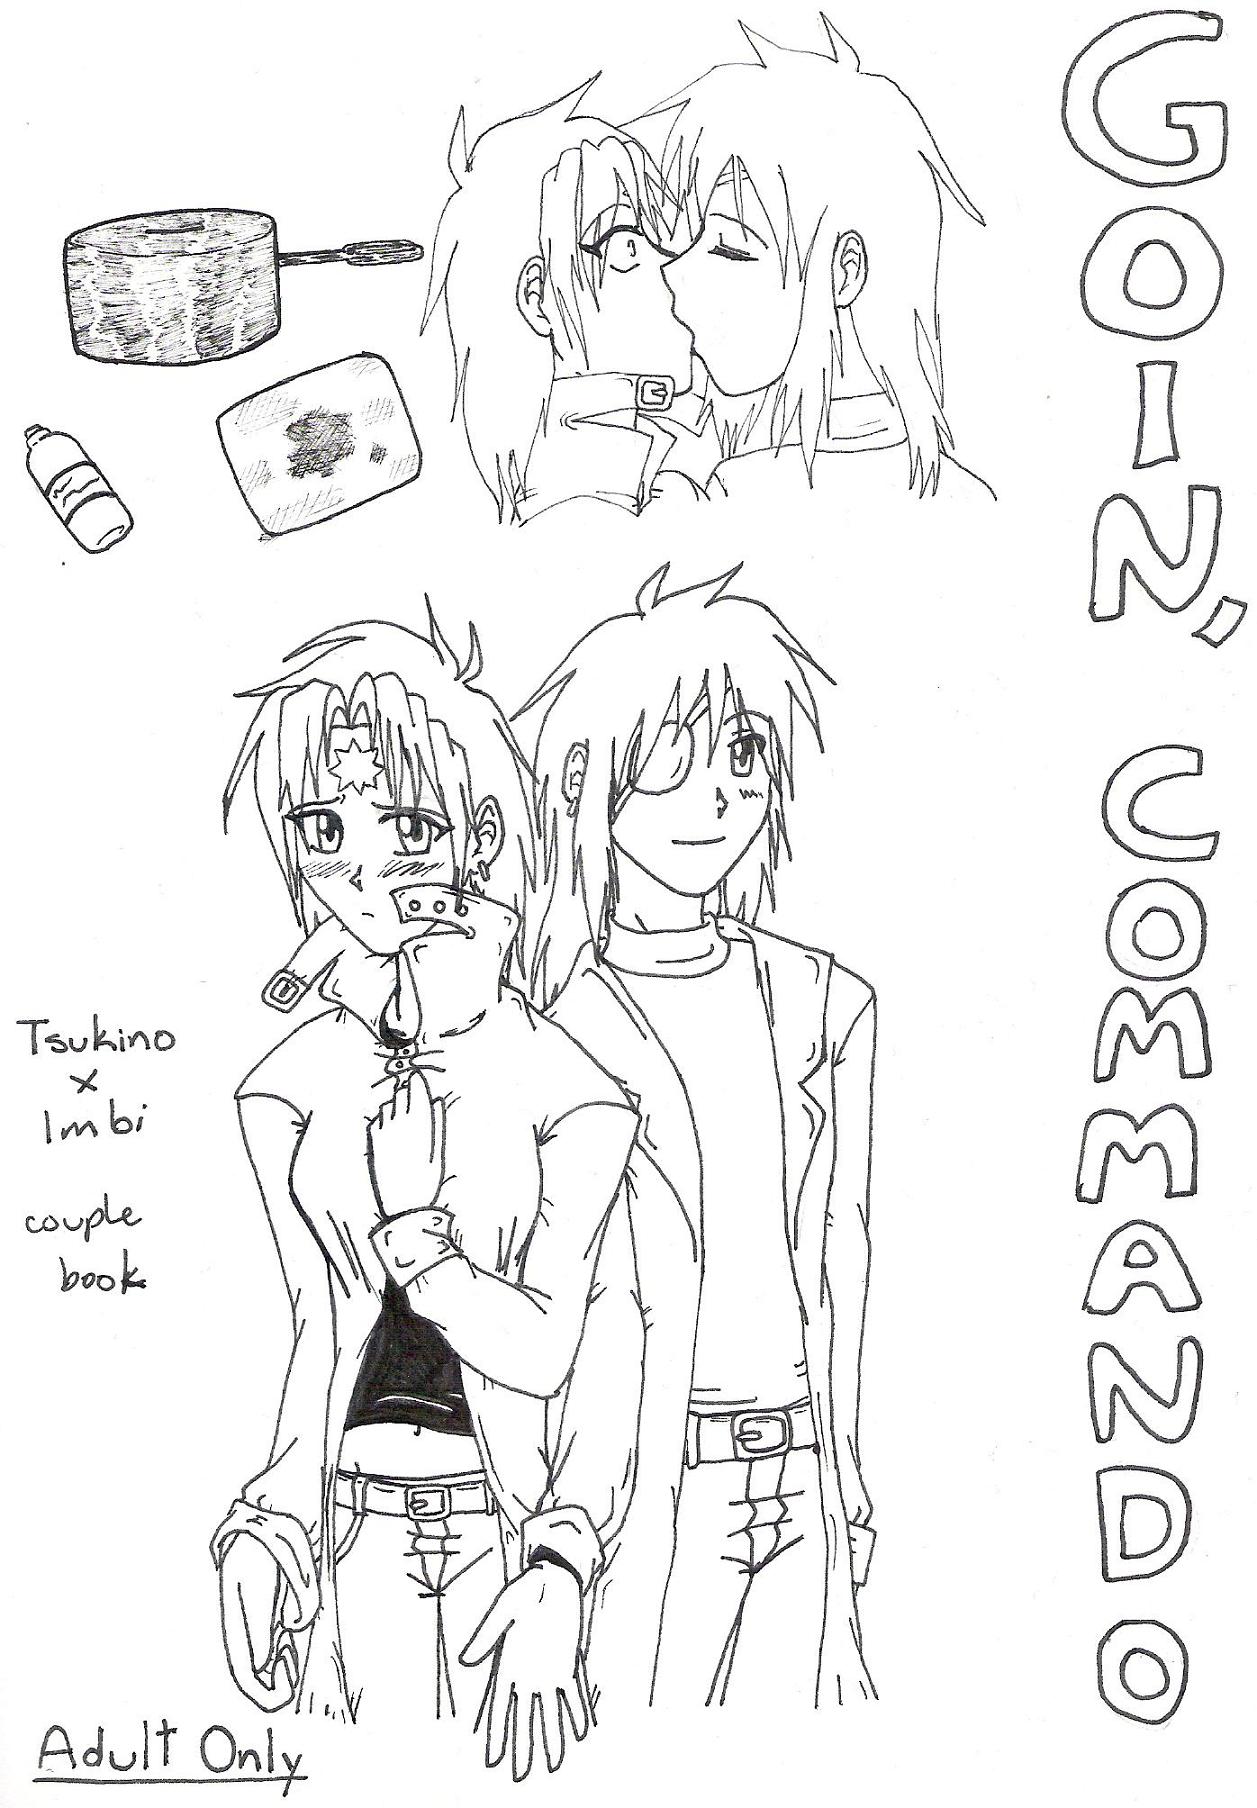 ::Goin' Commando:: by Kamaya_the_Cat